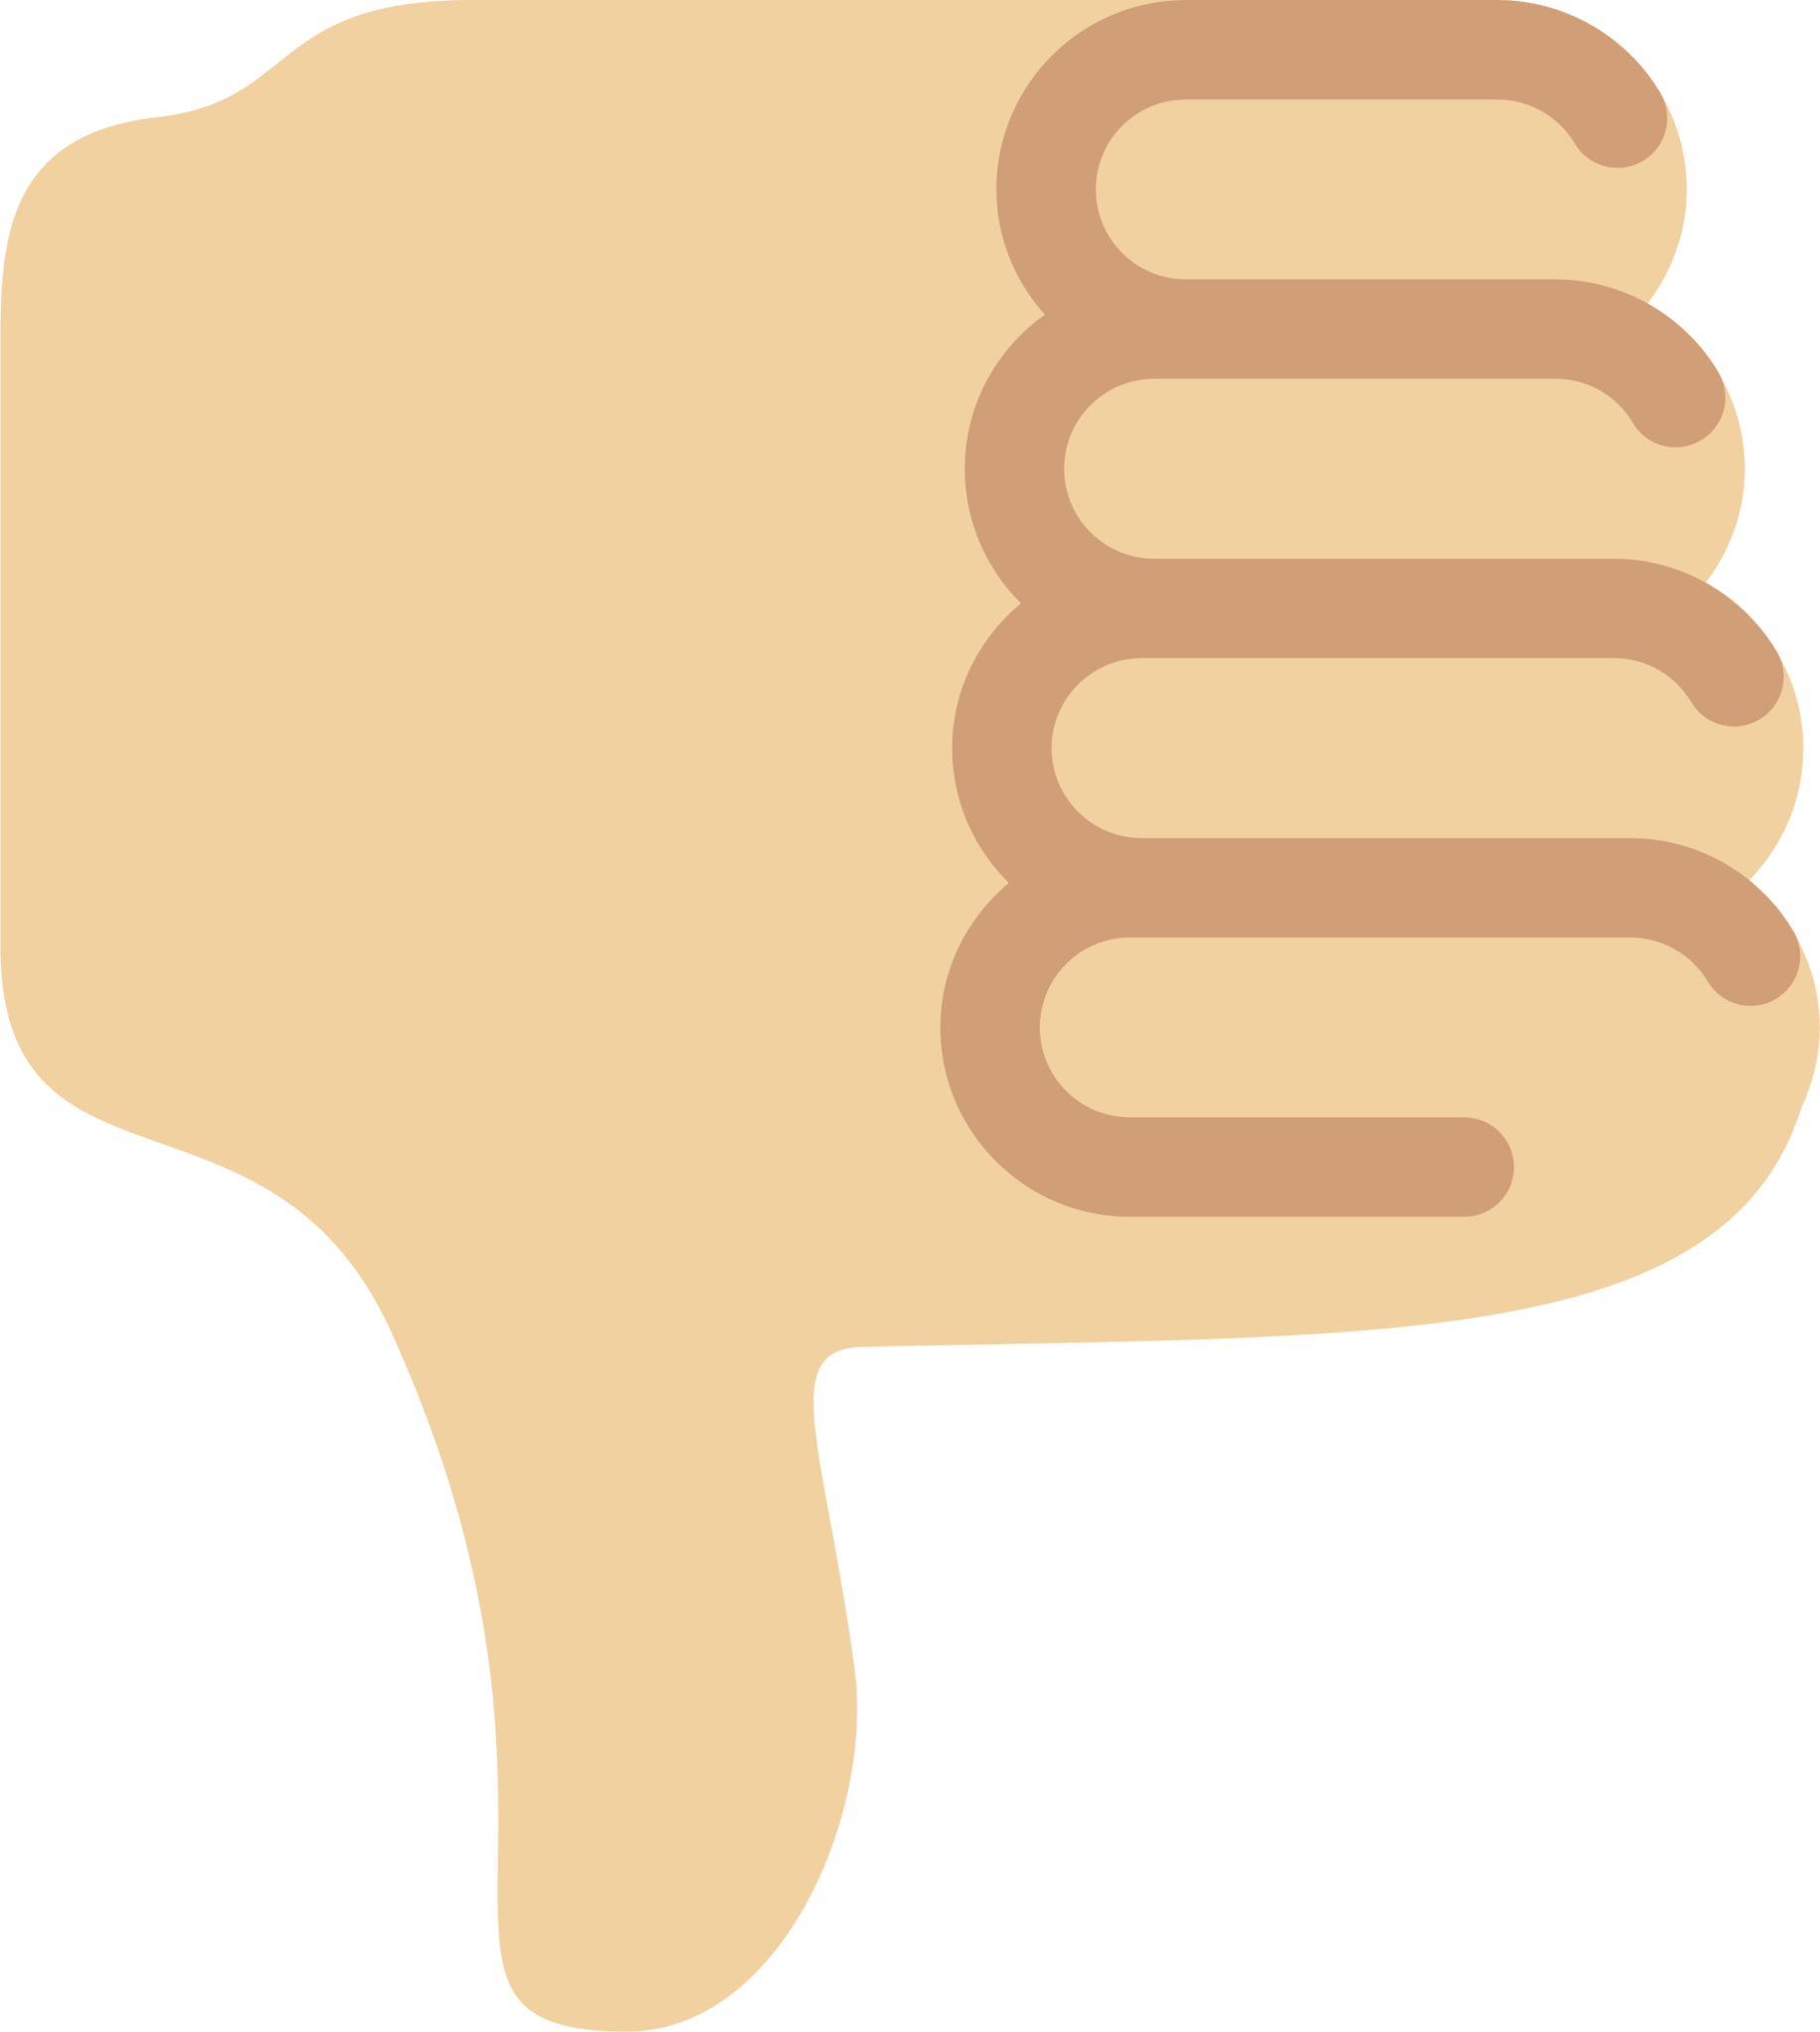 thumbs down sign tone 2 emoji